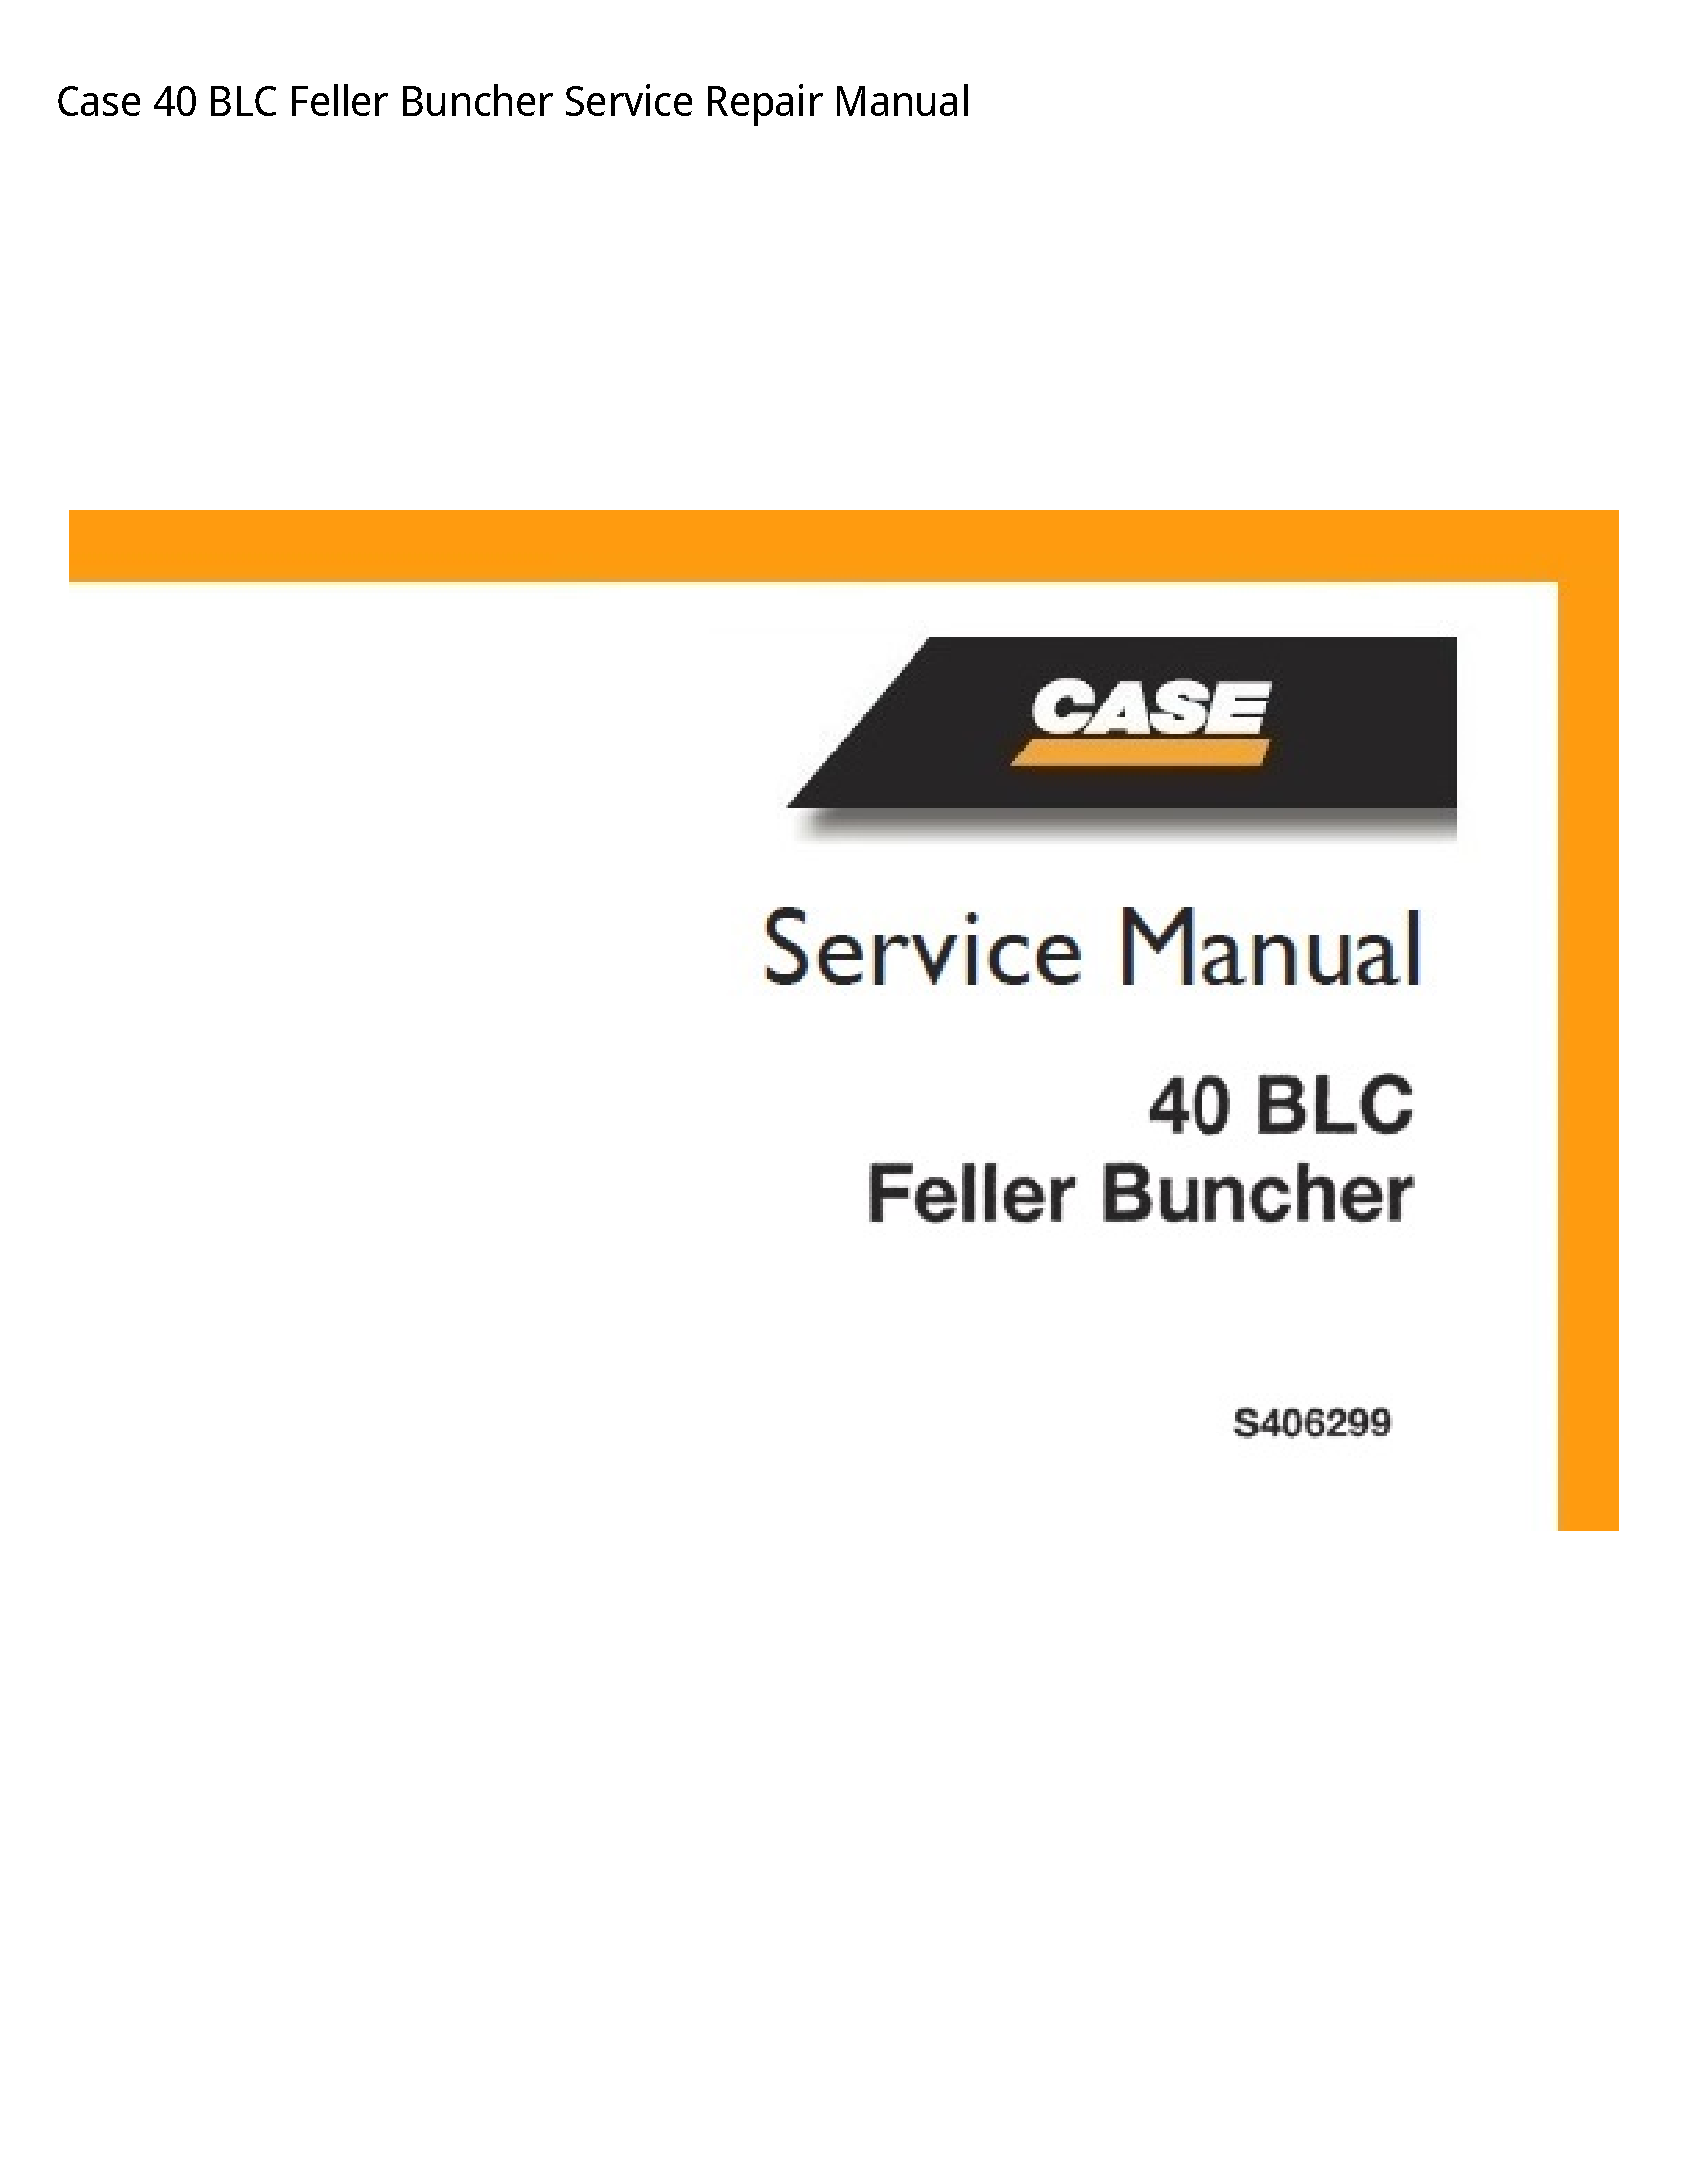 Case/Case IH 40 BLC Feller Buncher manual